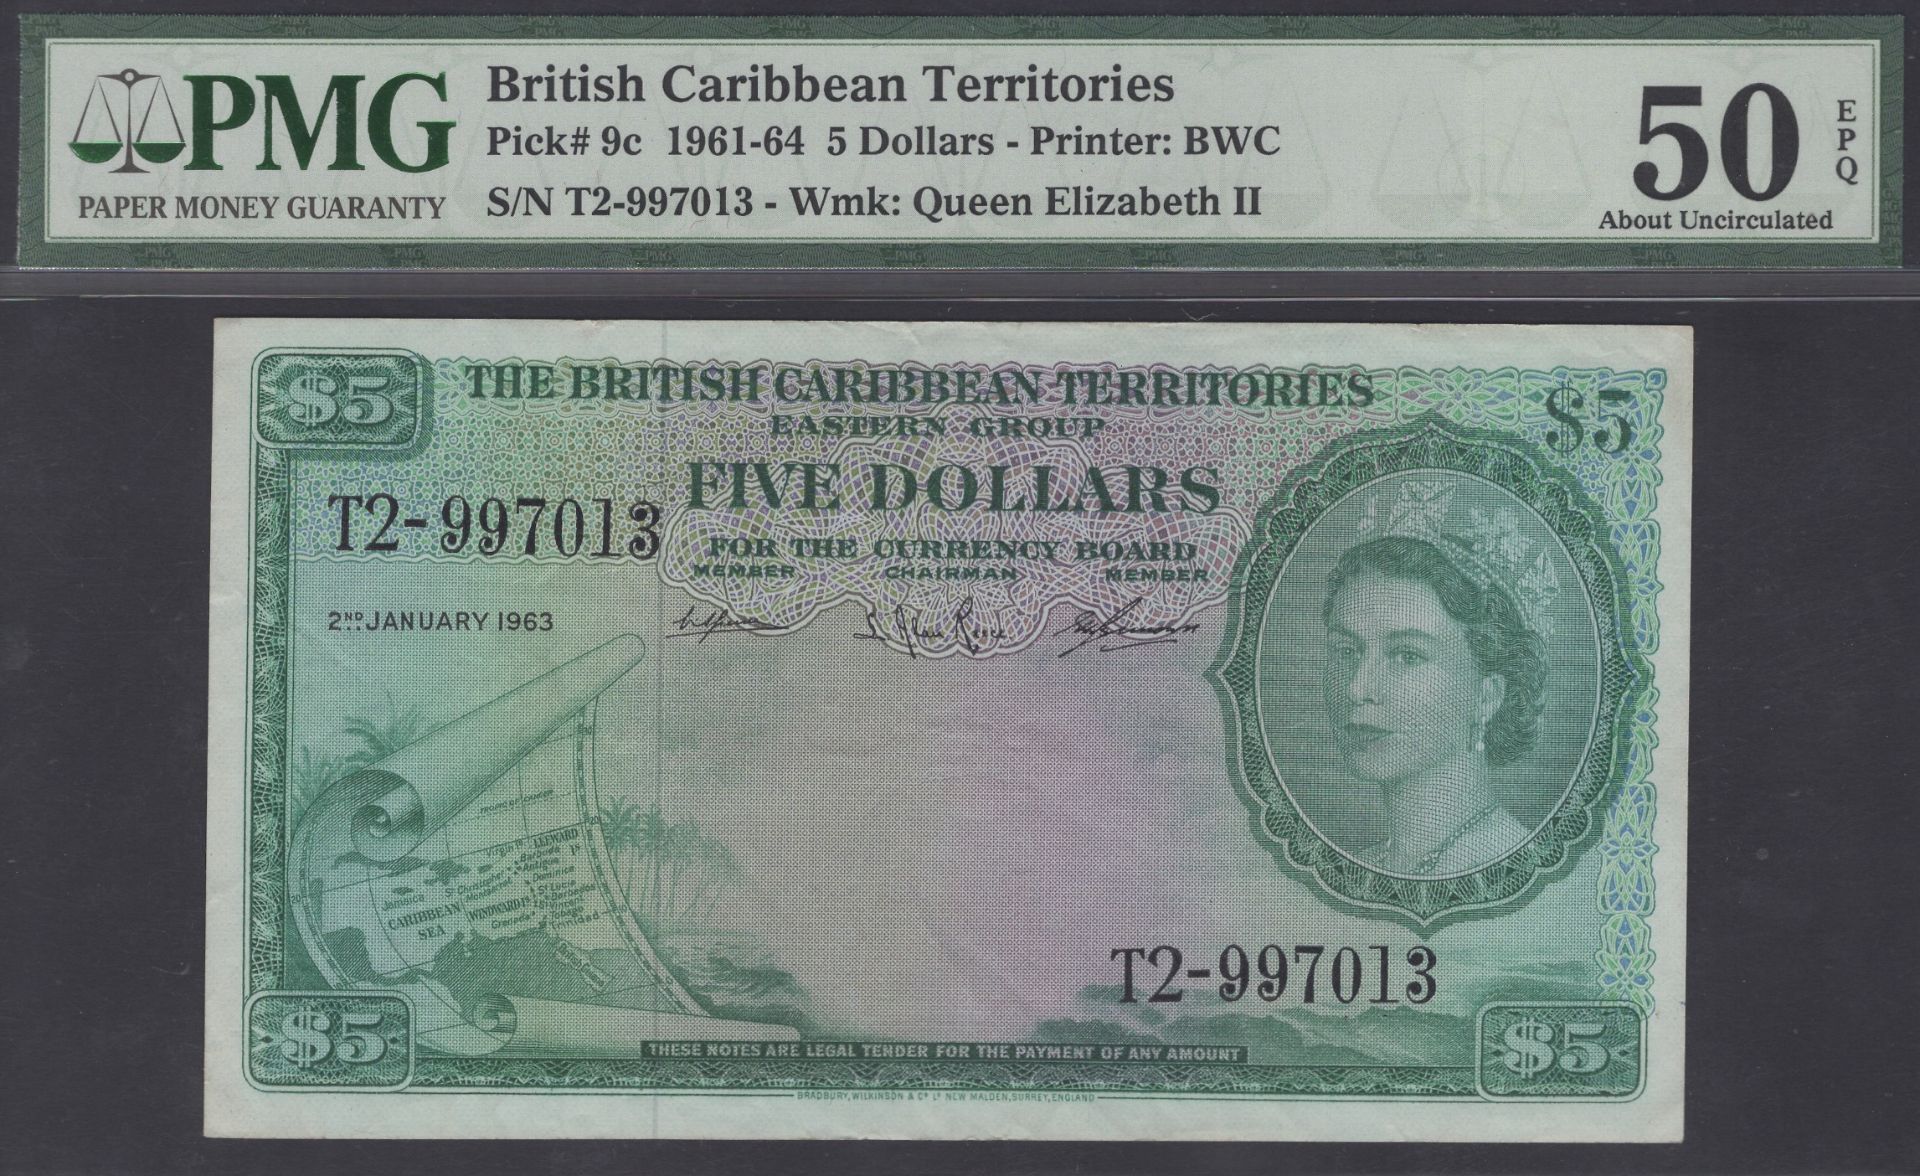 British Caribbean Territories, $5, 2 January 1963, serial number T2-997013, Spence, Reece an...